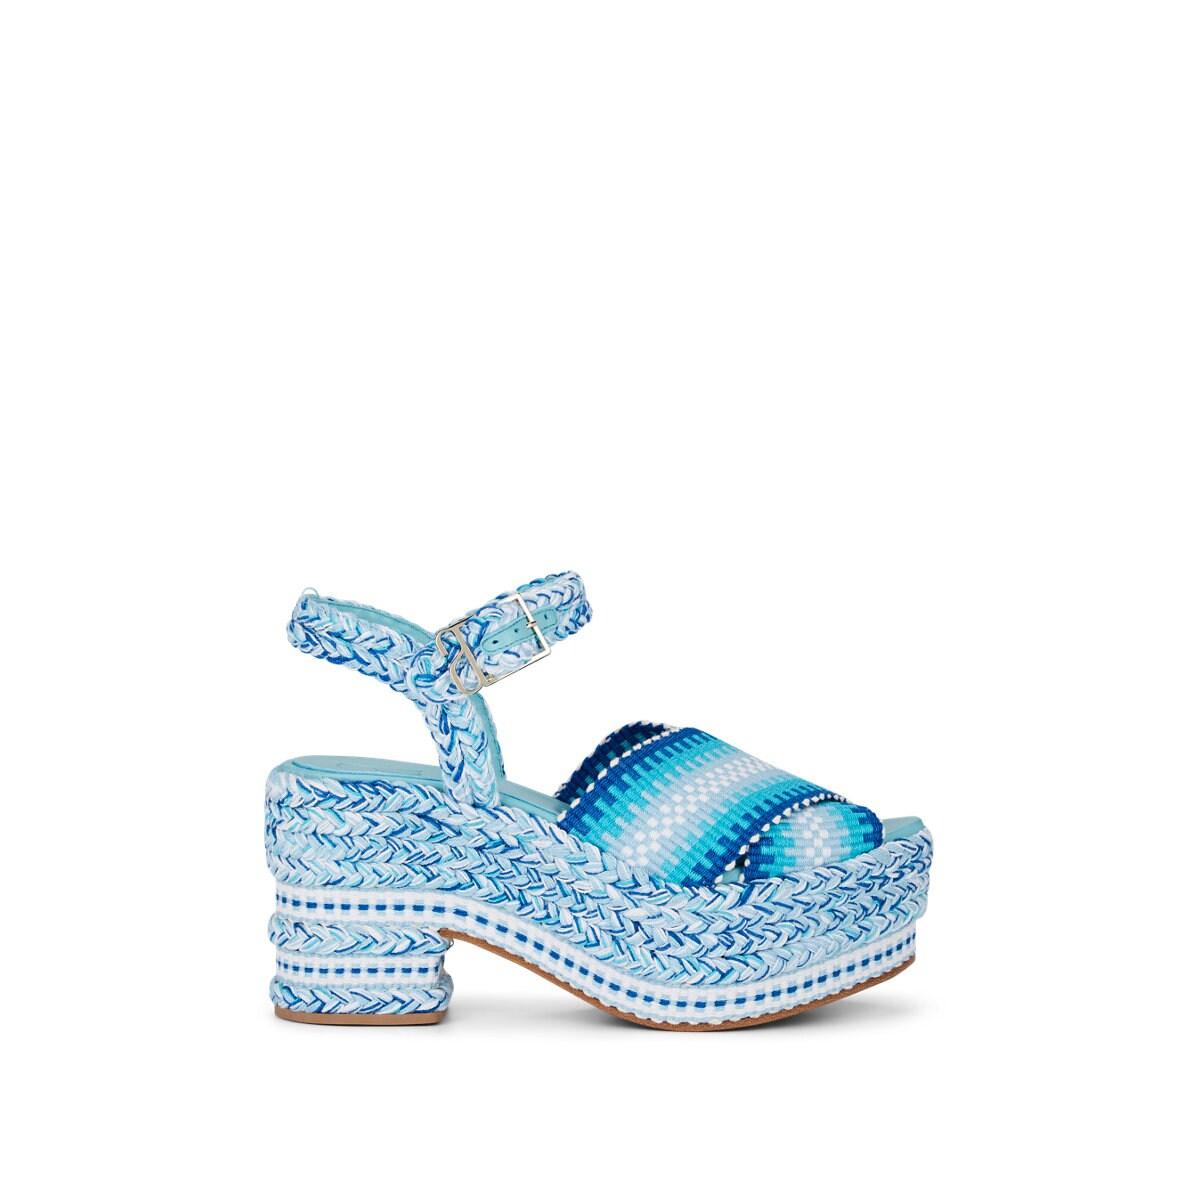 ANTOLINA PARIS Brenda Cotton Platform Sandals in Blue - Lyst